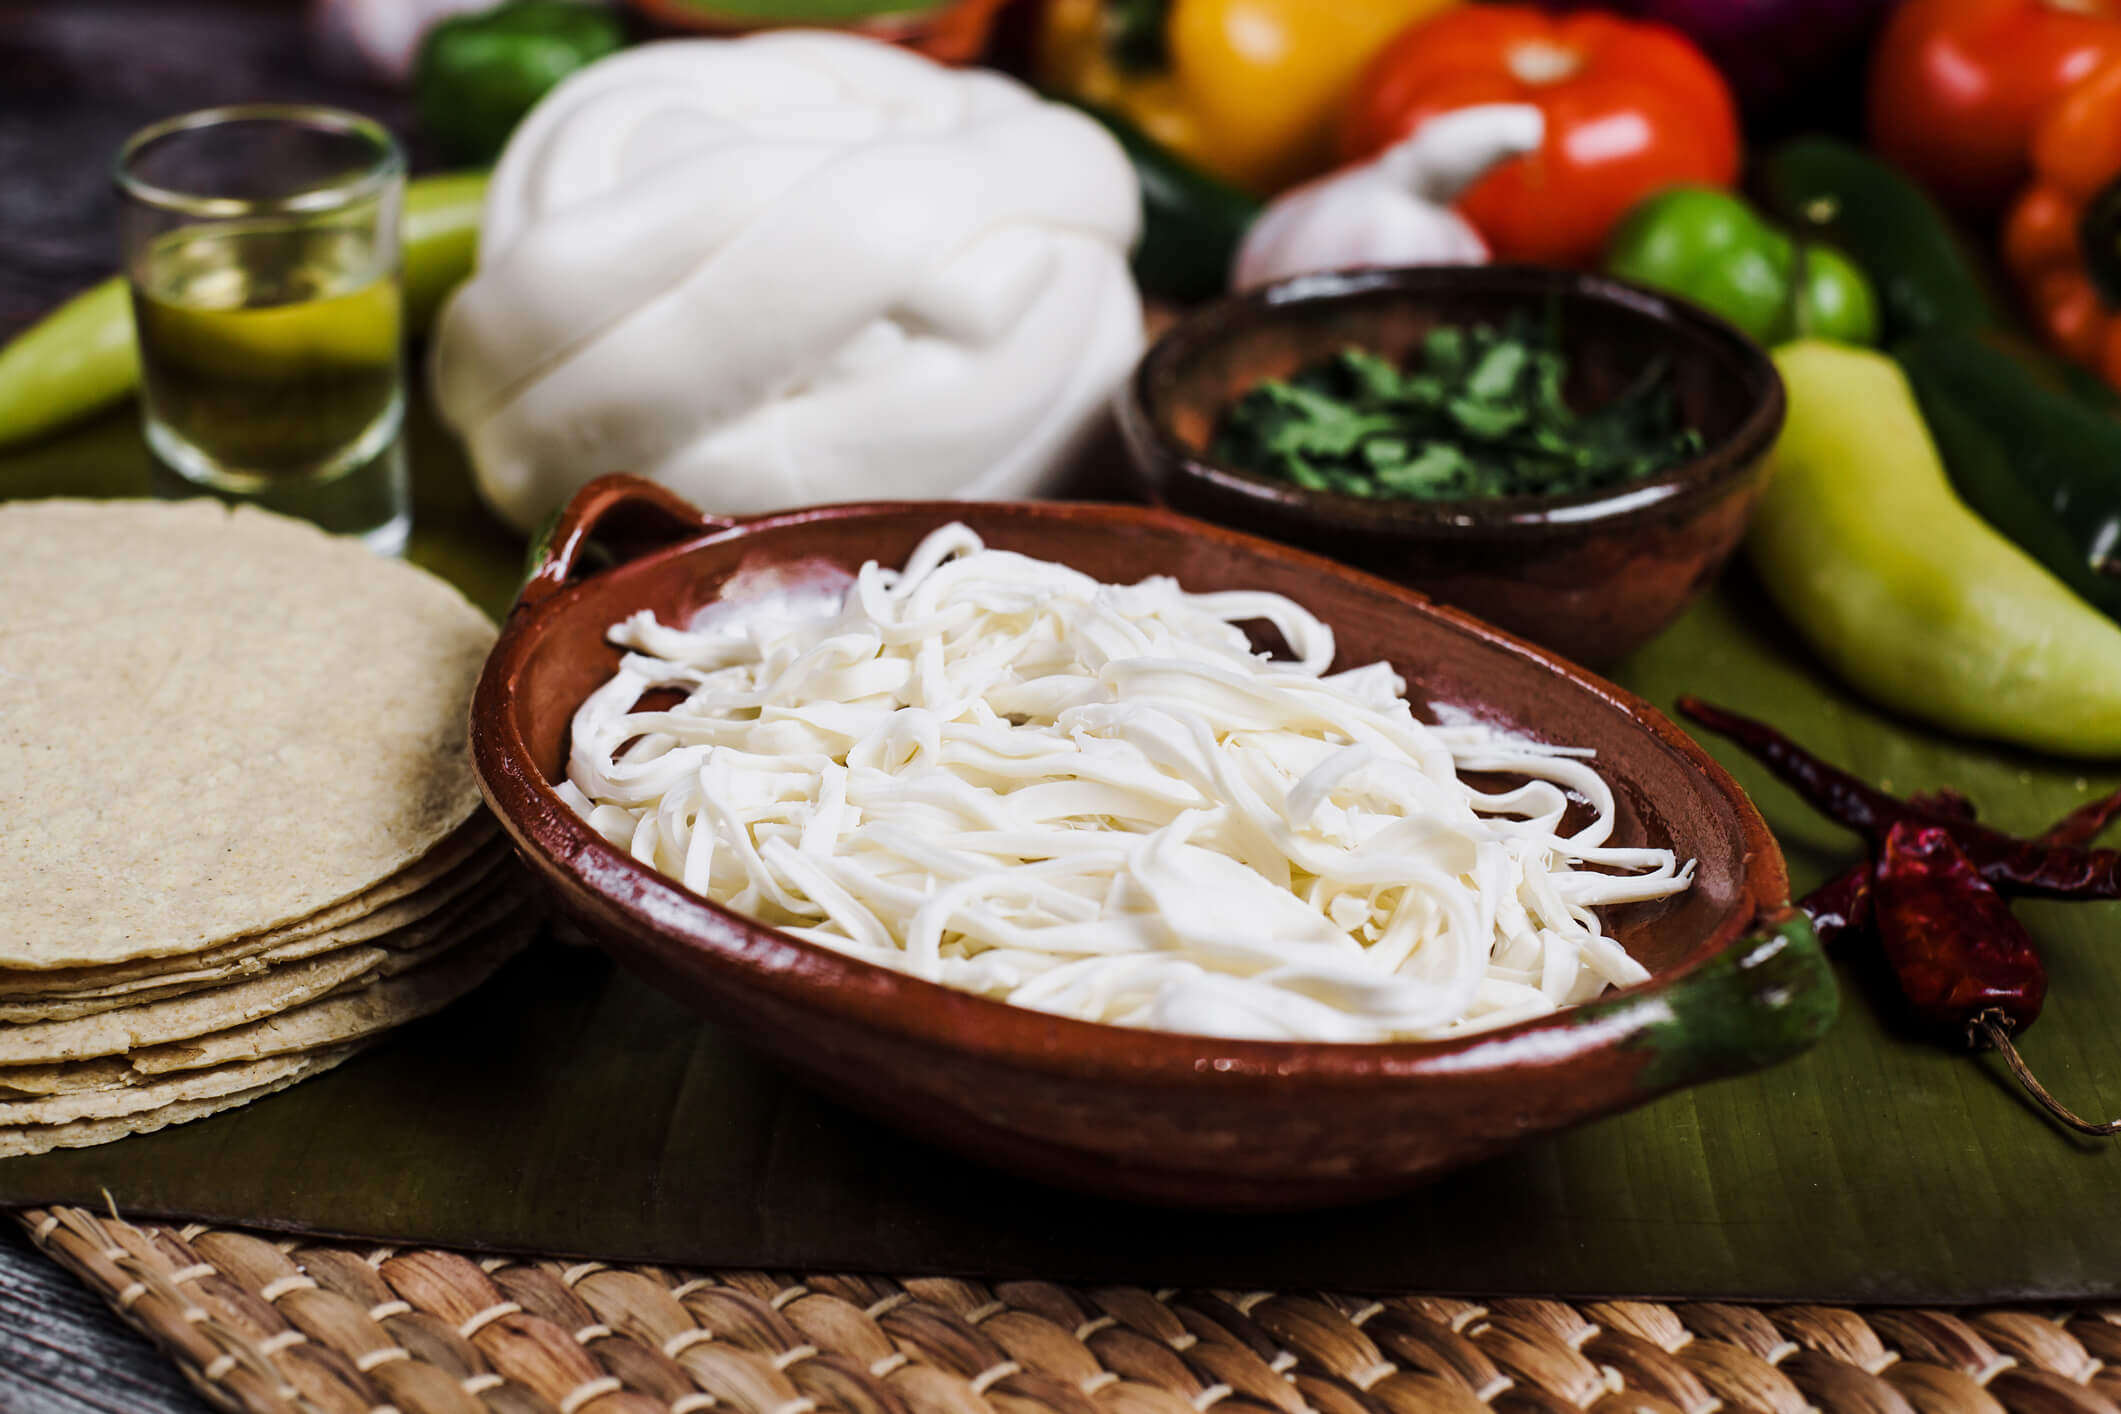 Can I Eat Oaxaca Cheese While Pregnant?